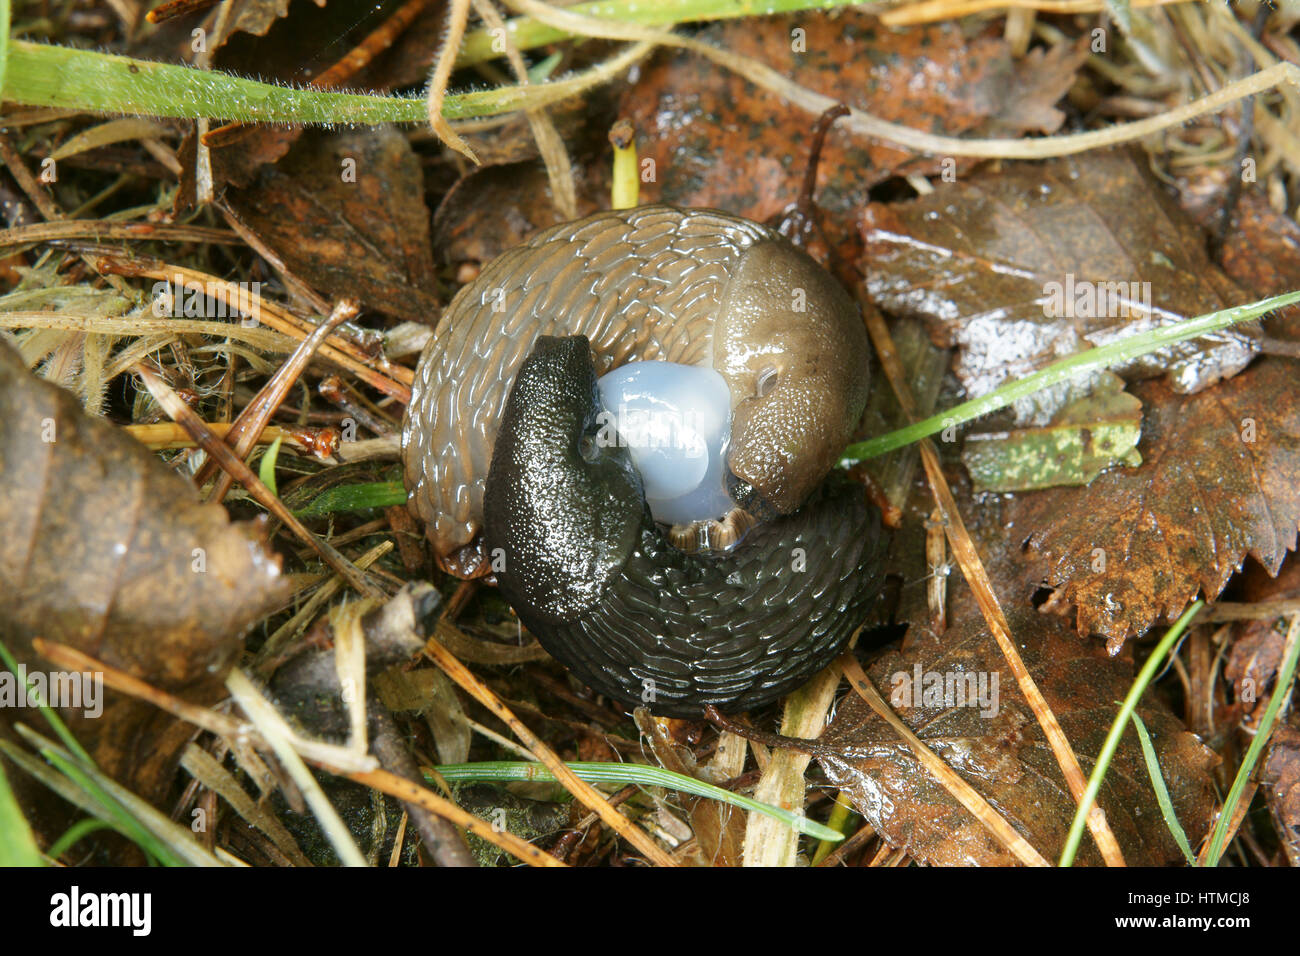 Mating slugs Stock Photo